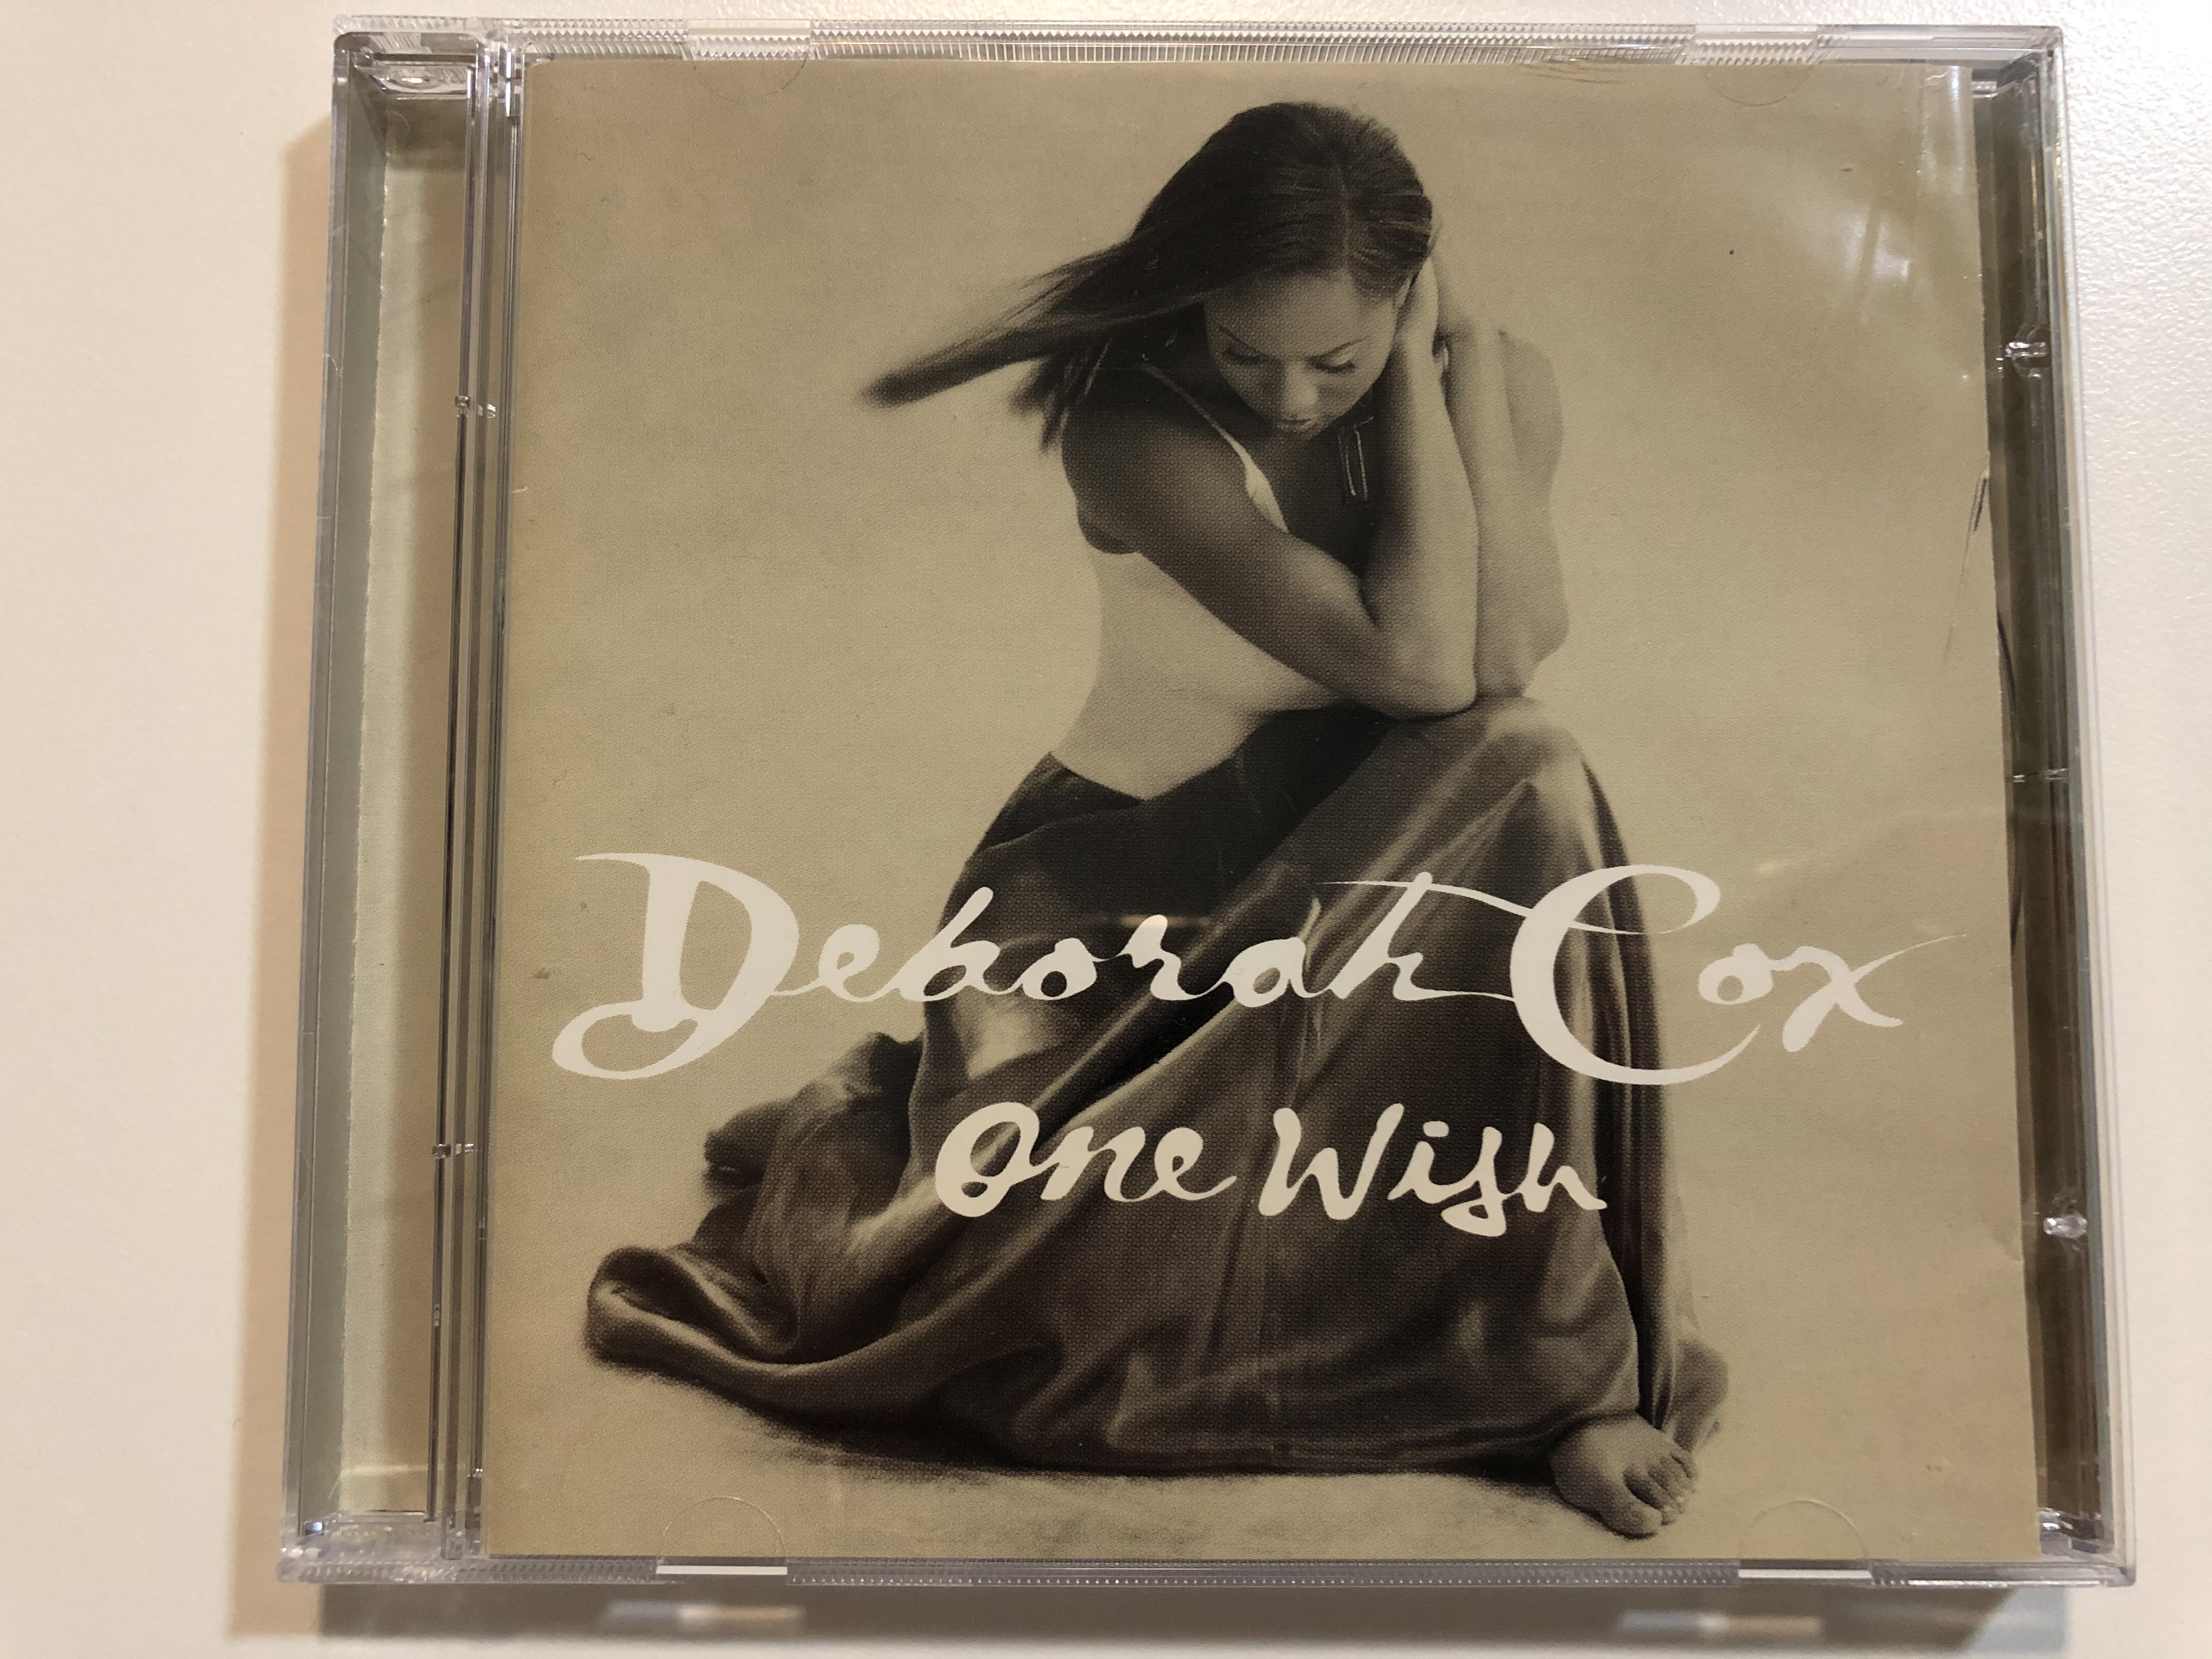 deborah-cox-one-wish-arista-audio-cd-1998-07822-19022-2-1-.jpg